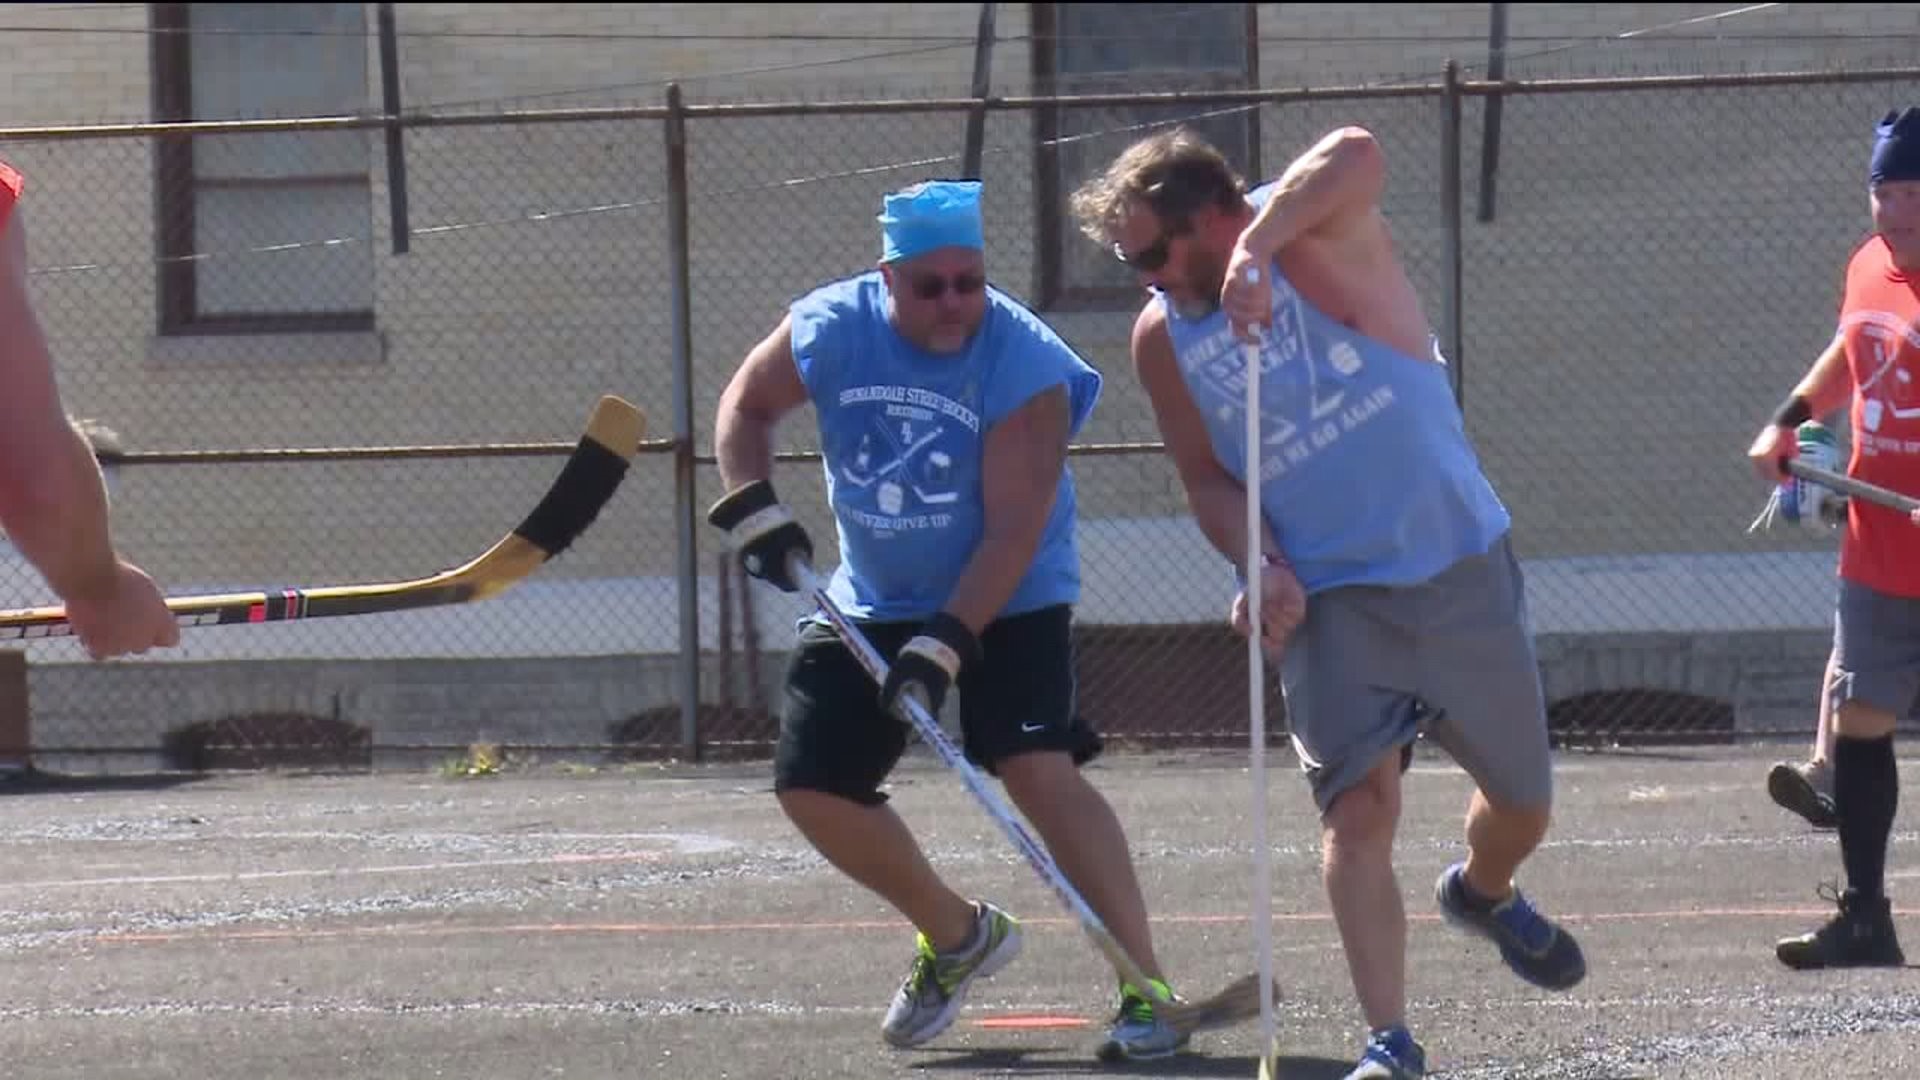 Street Hockey Players Reunite to Battle Cancer